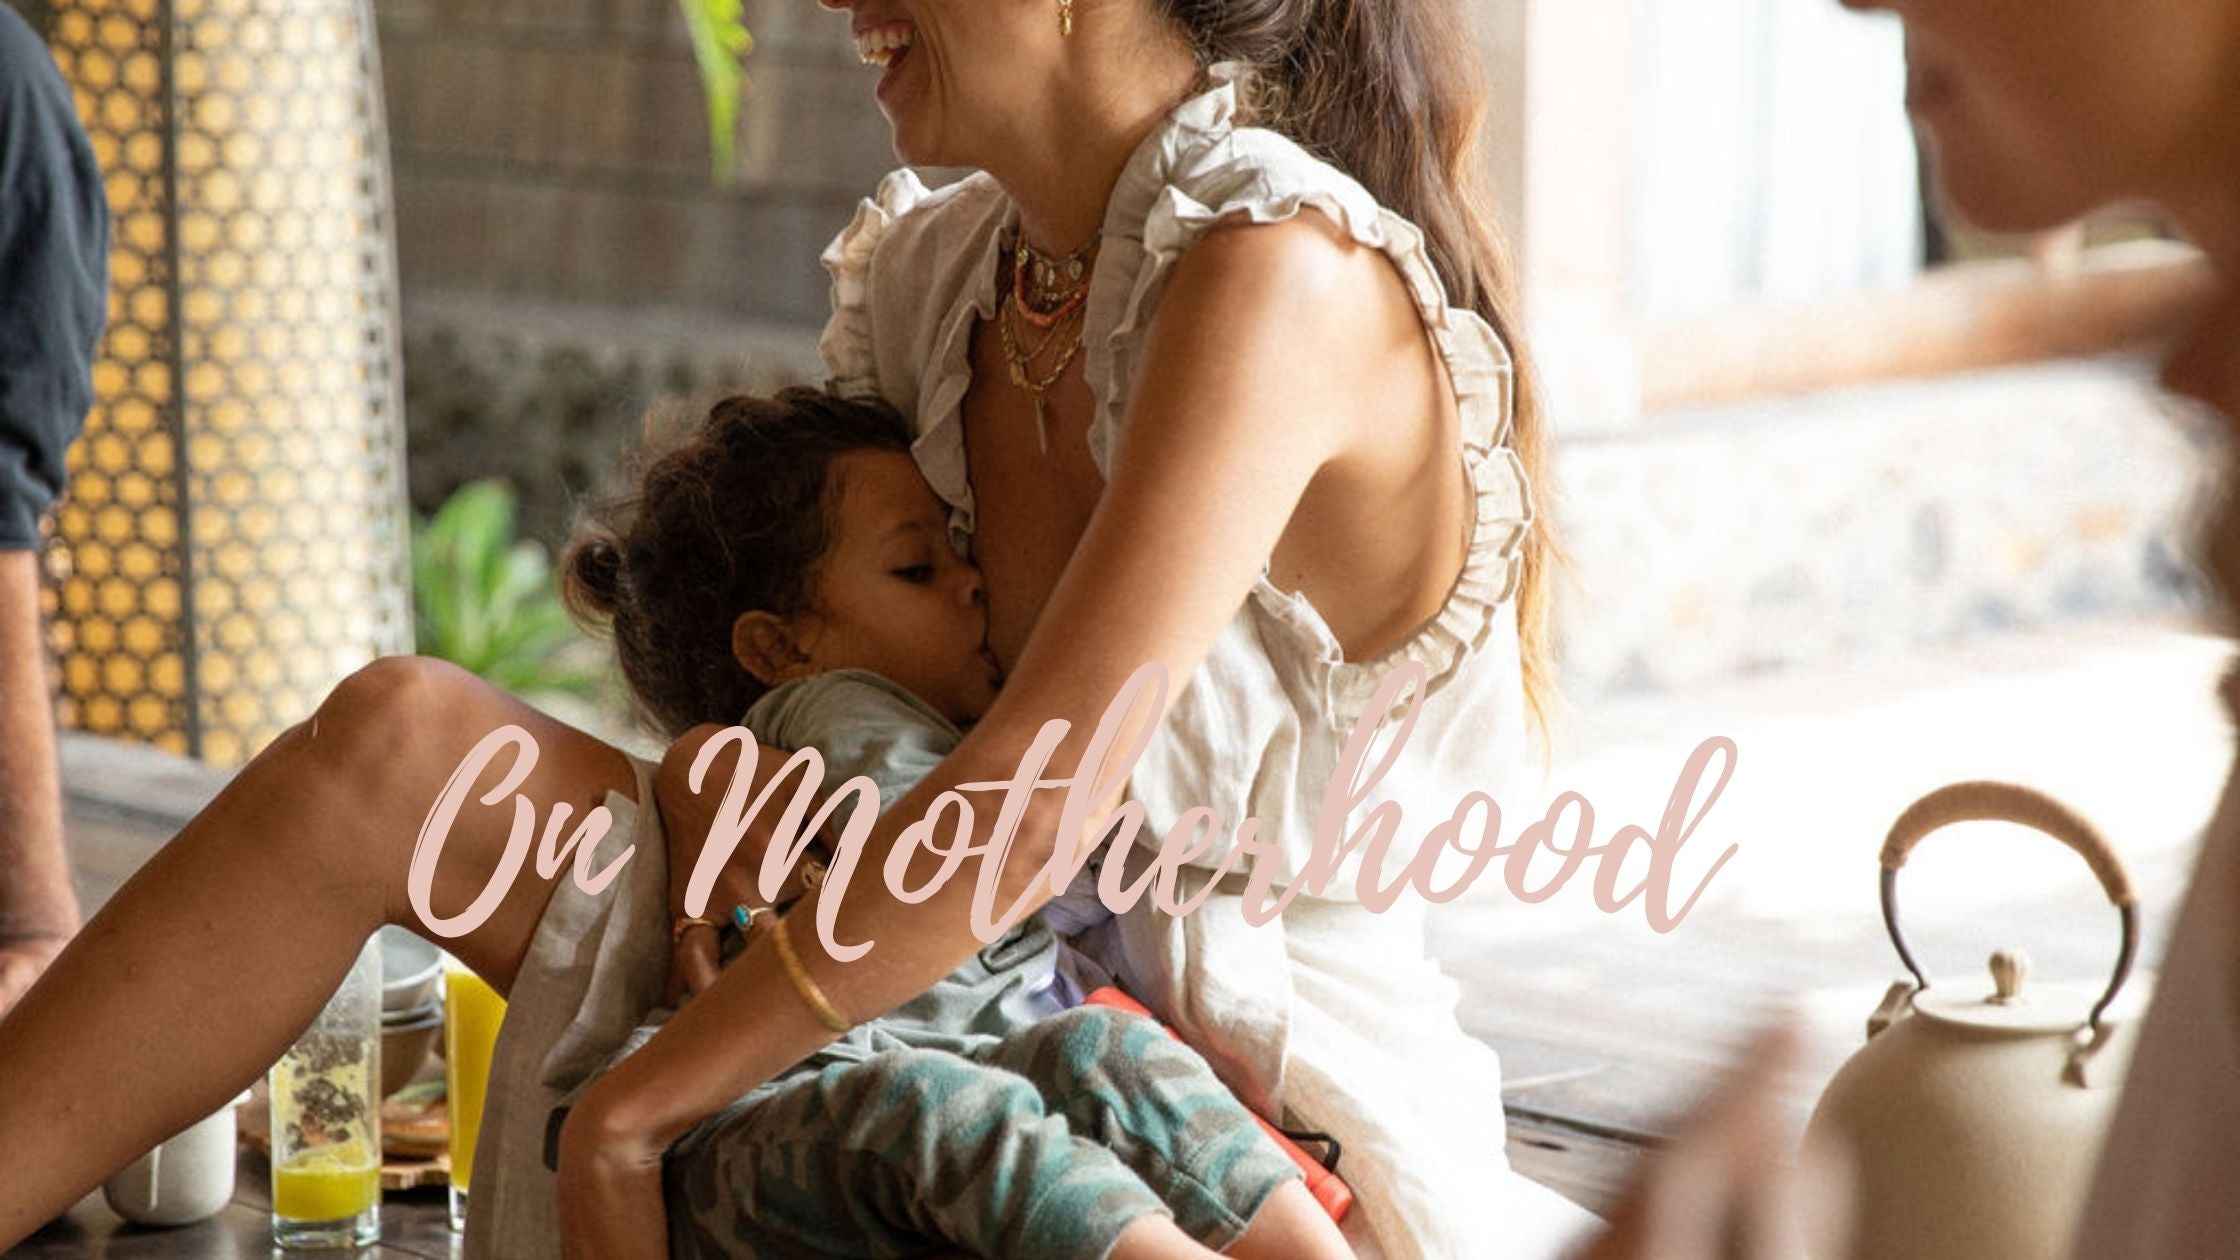 Motherhood & Parenting - Letting our children choose